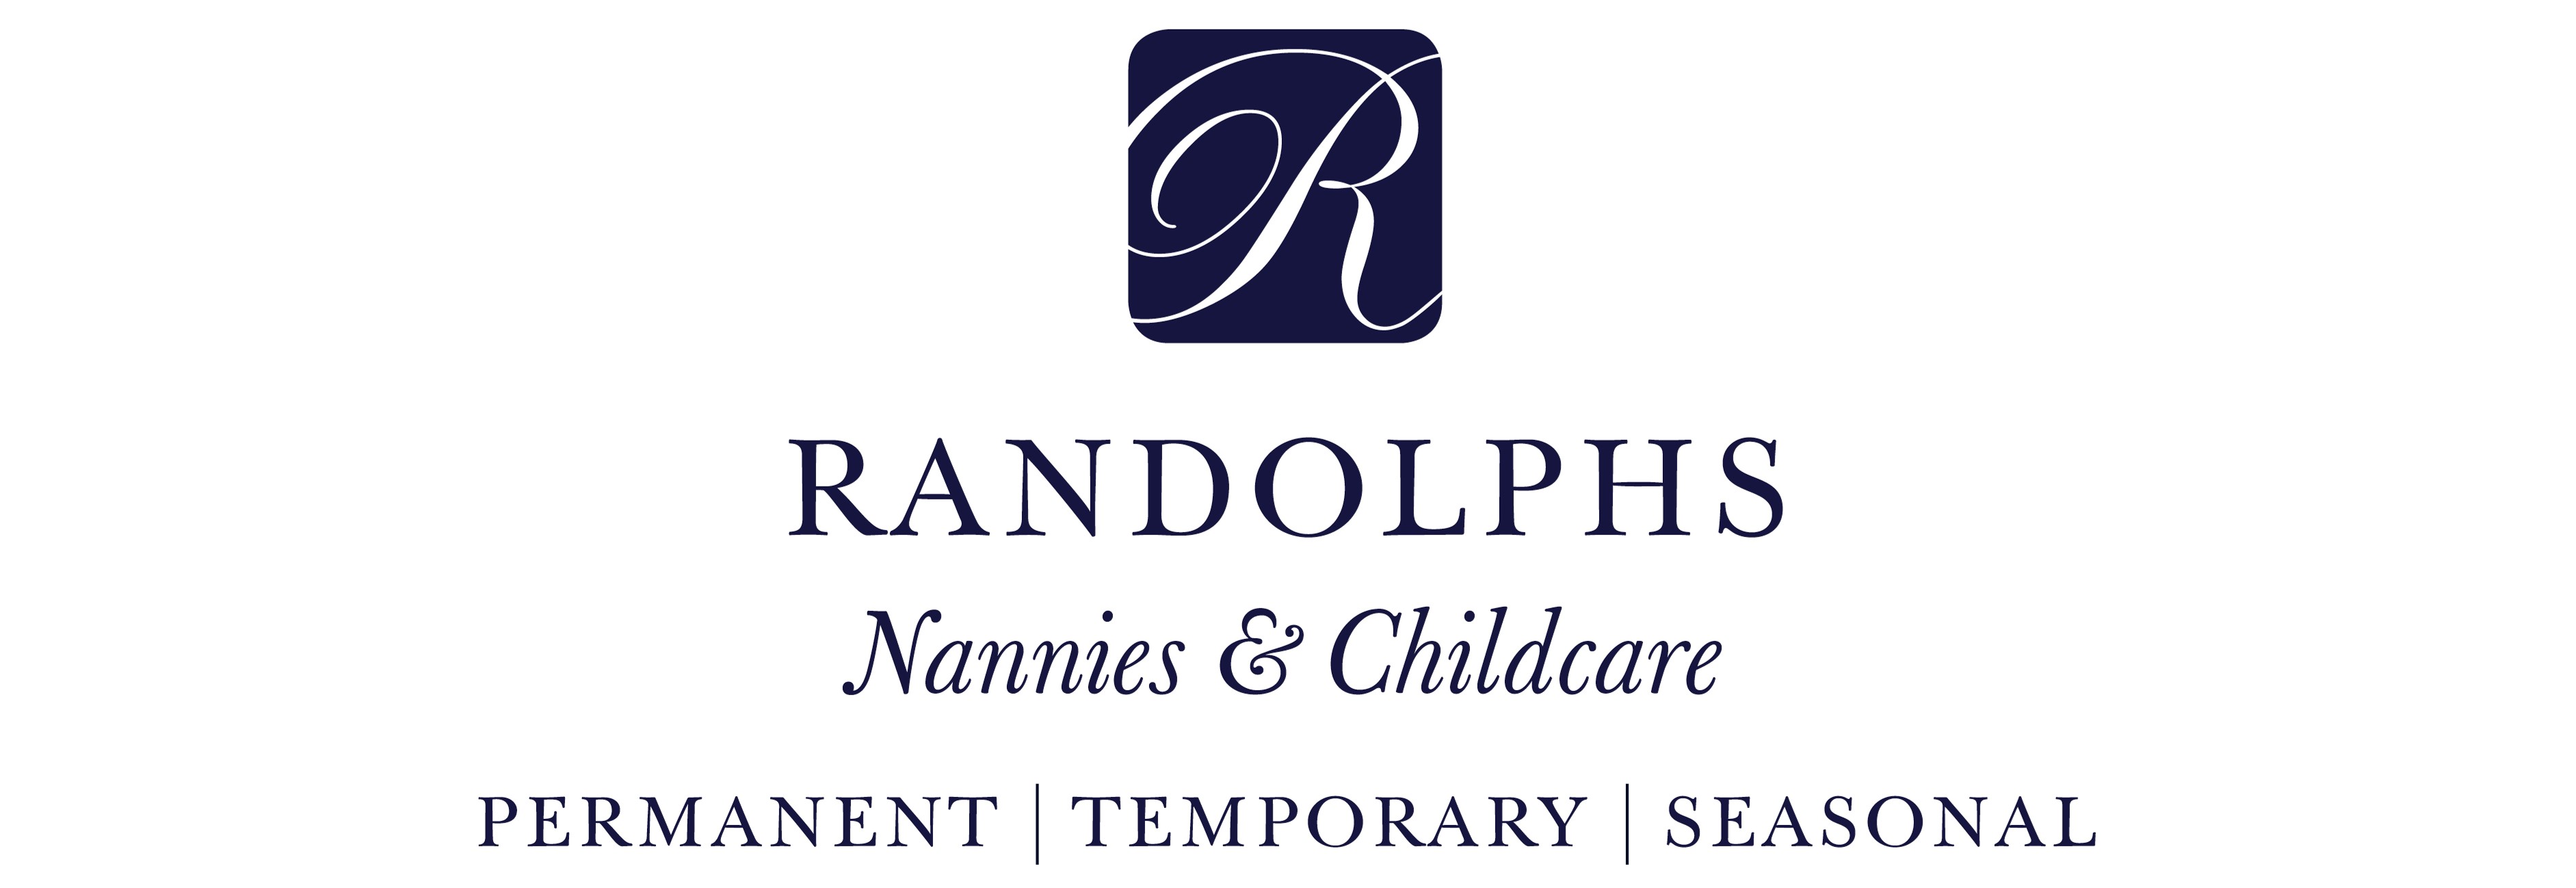 Randolphs Recruitment - a nannyjob.co.uk partner nanny agency